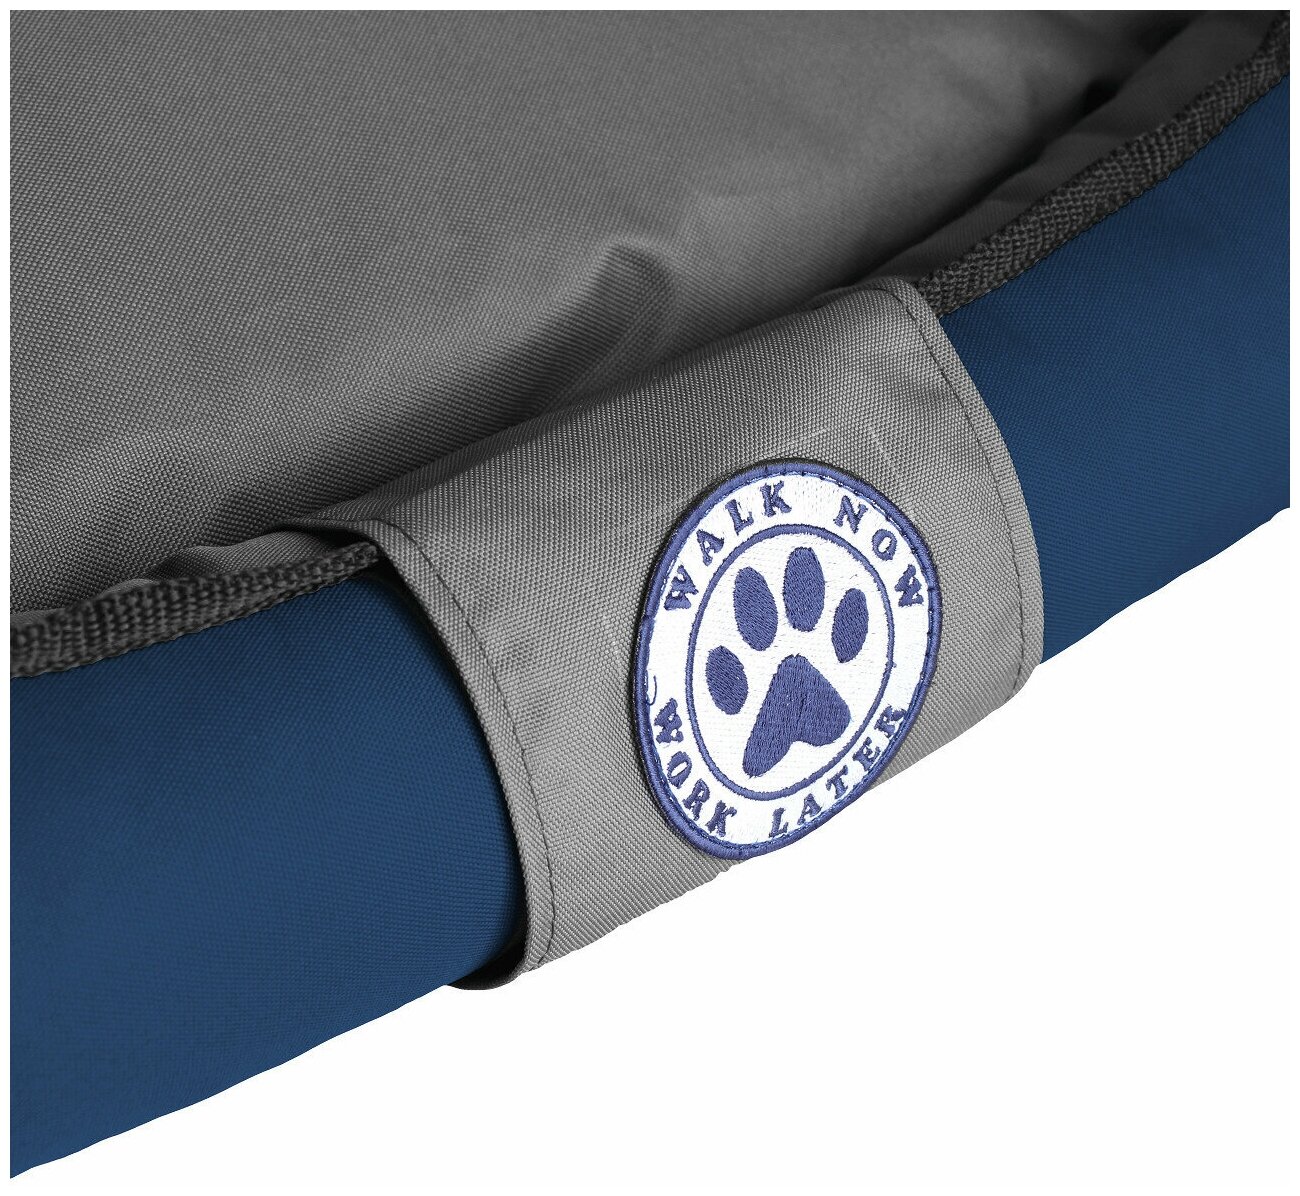 Лежанка для собаки антивандальная со съемным чехлом синяя Lapalandia Размер L